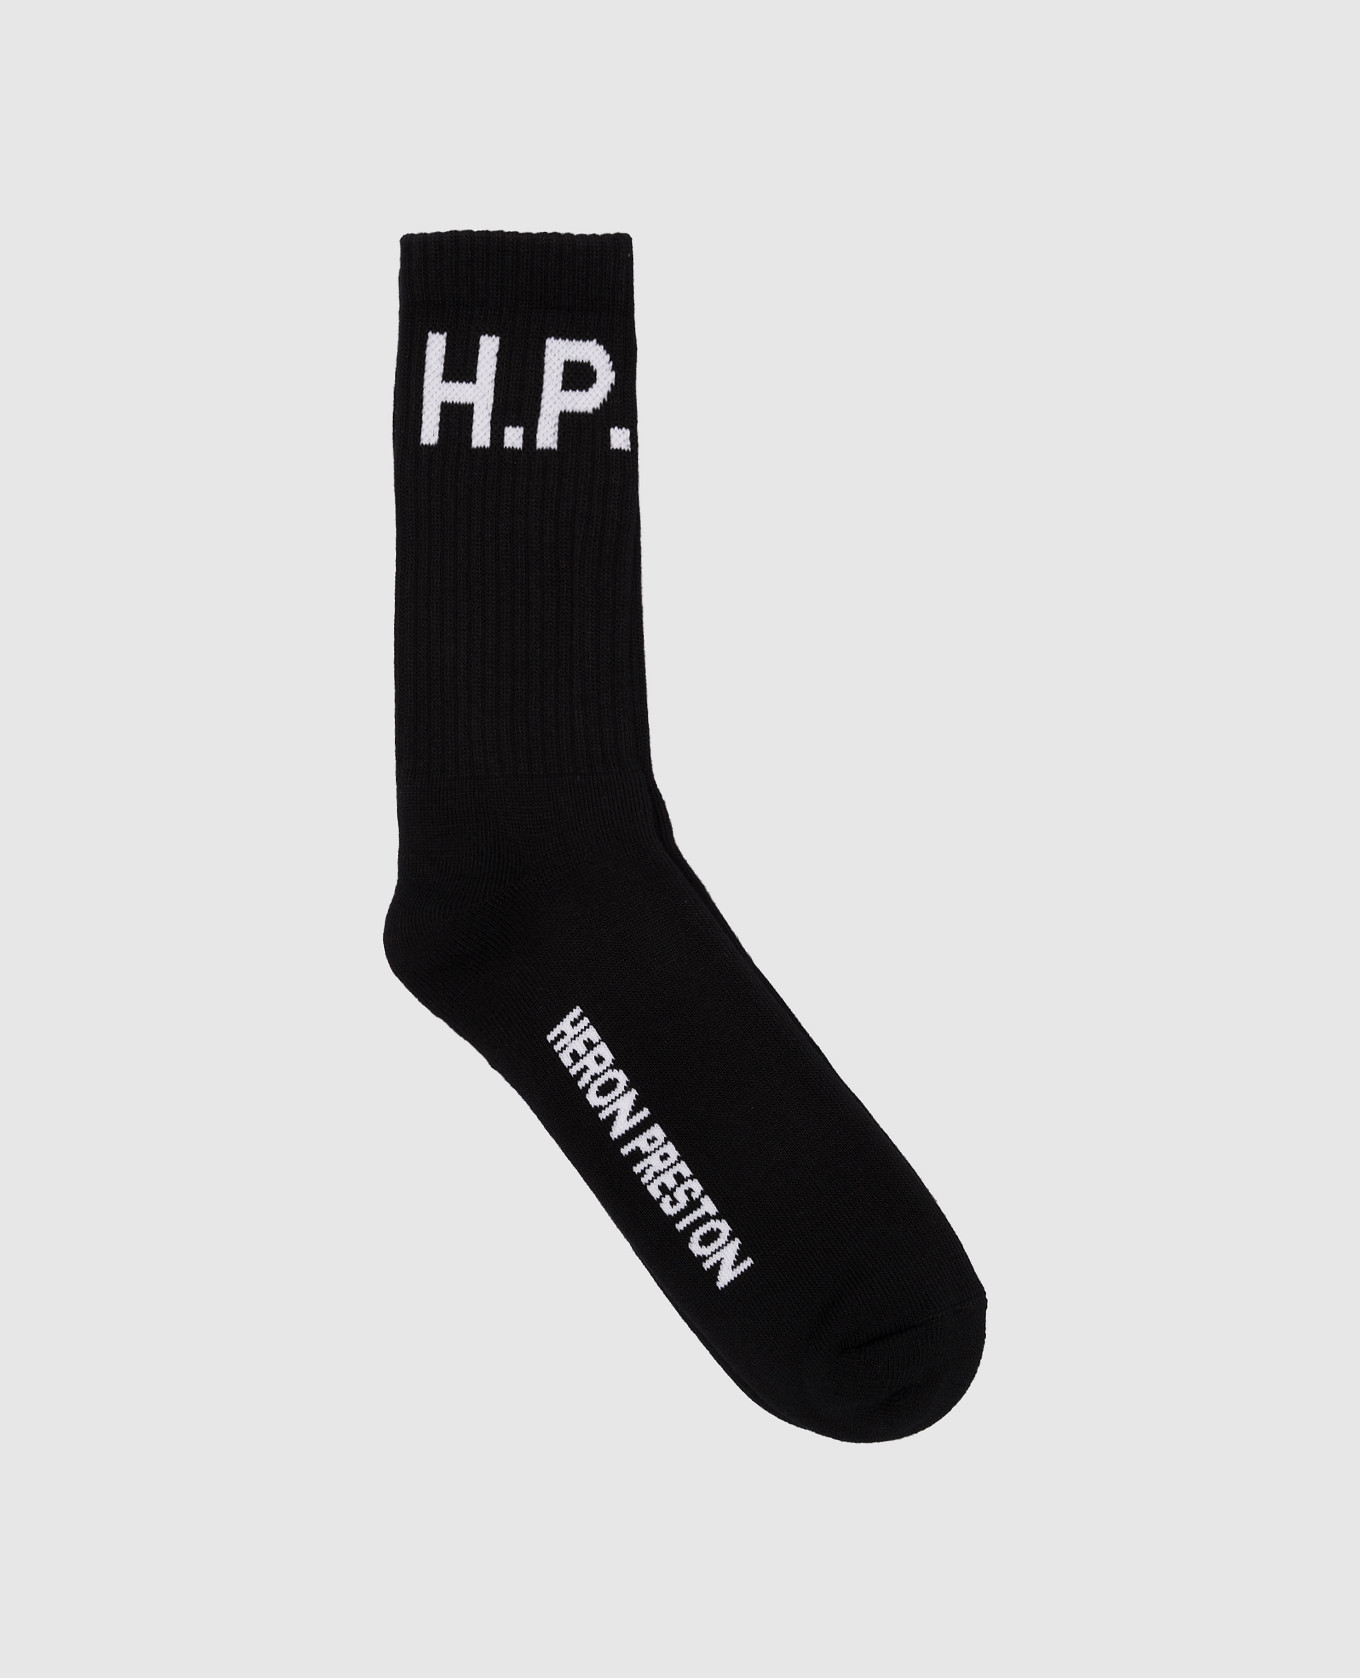 Black socks with a logo pattern